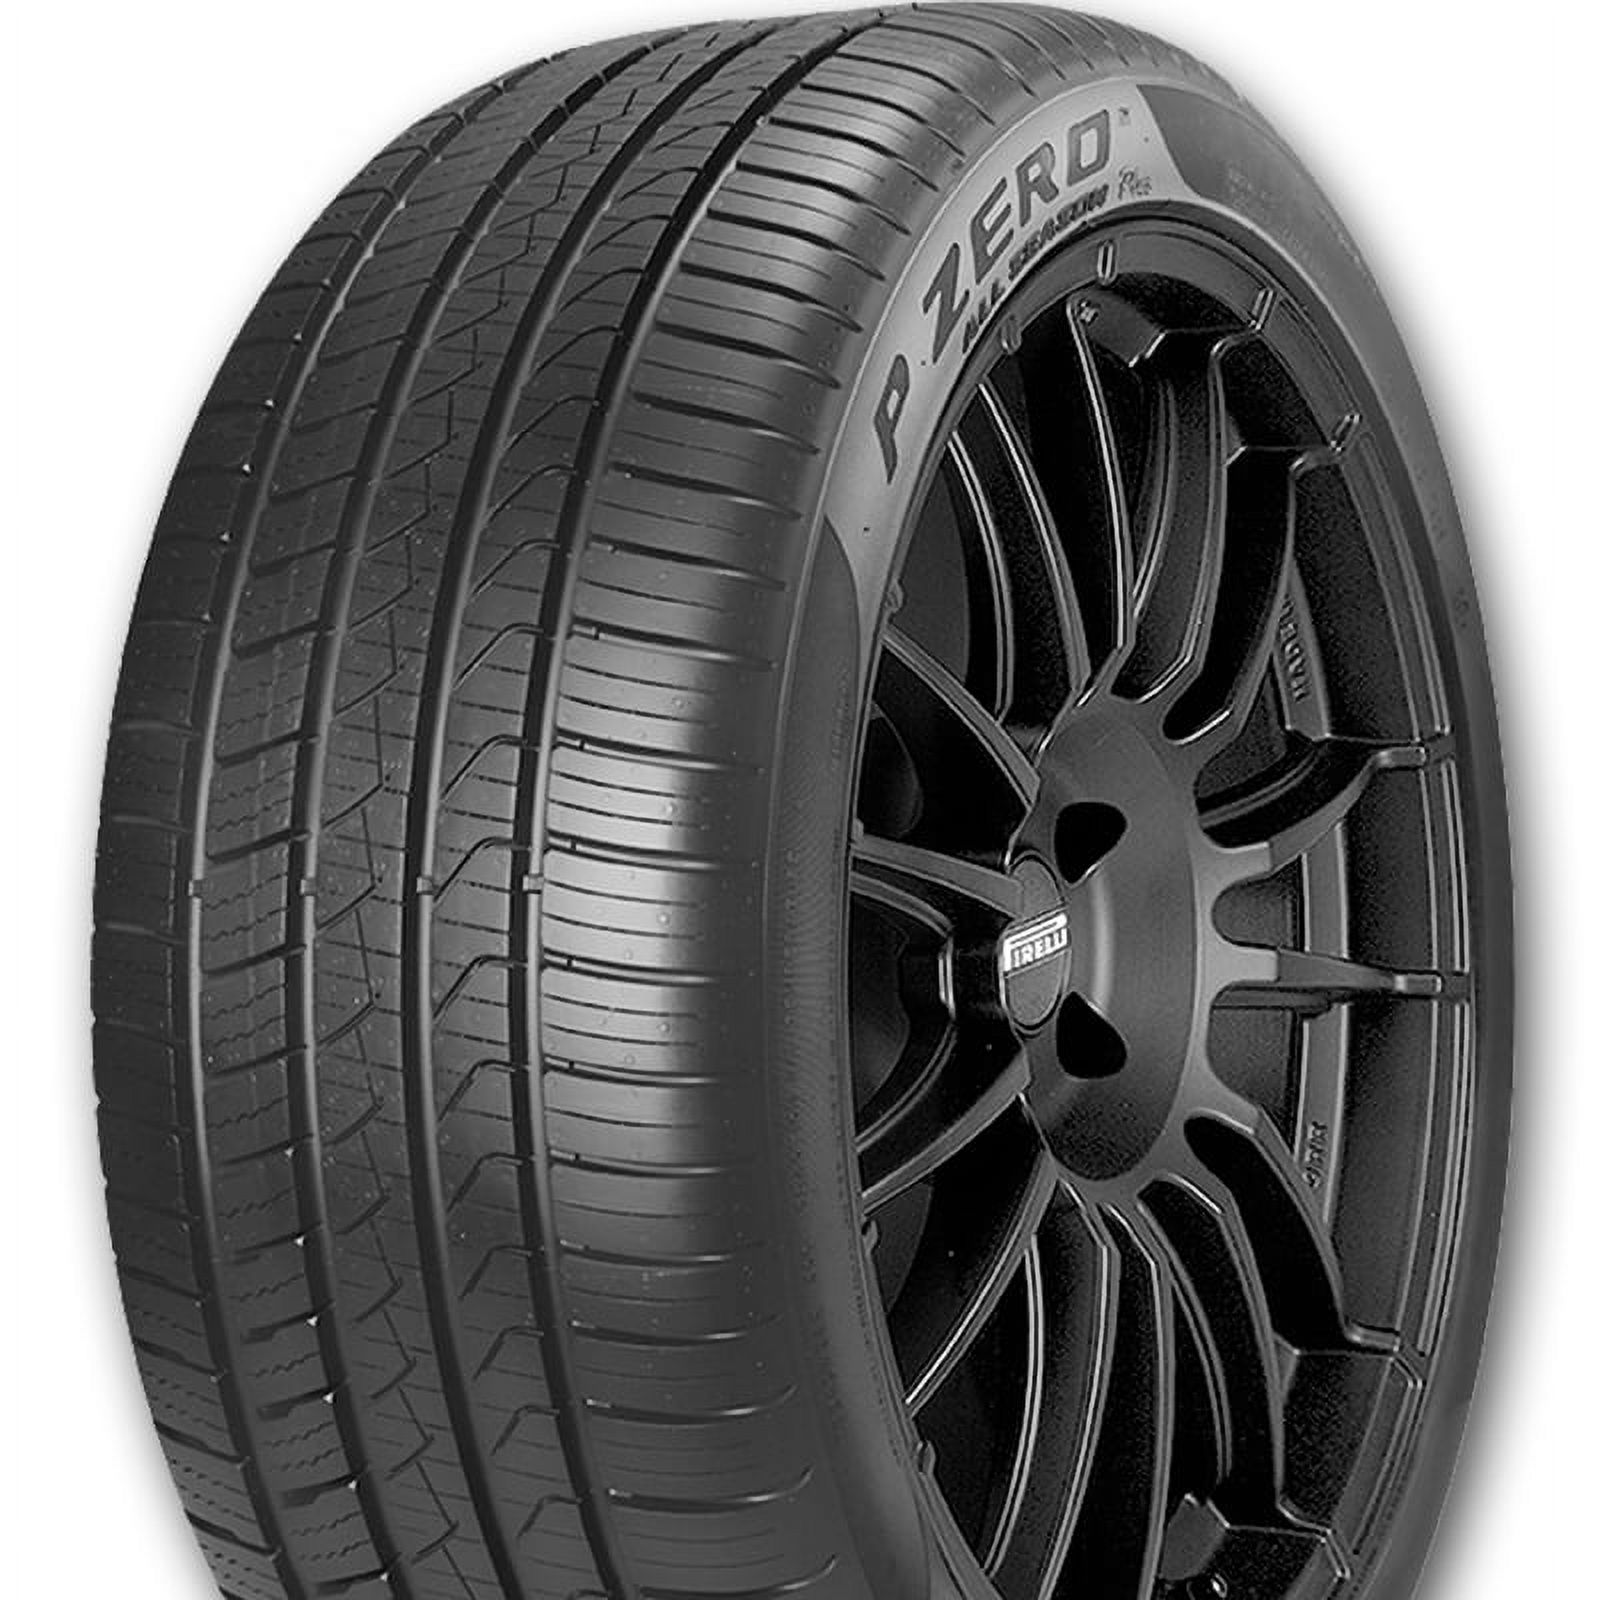 Pirelli P Zero All Season Plus UHP All Season 245/45R20 103Y XL Passenger Tire - image 2 of 3